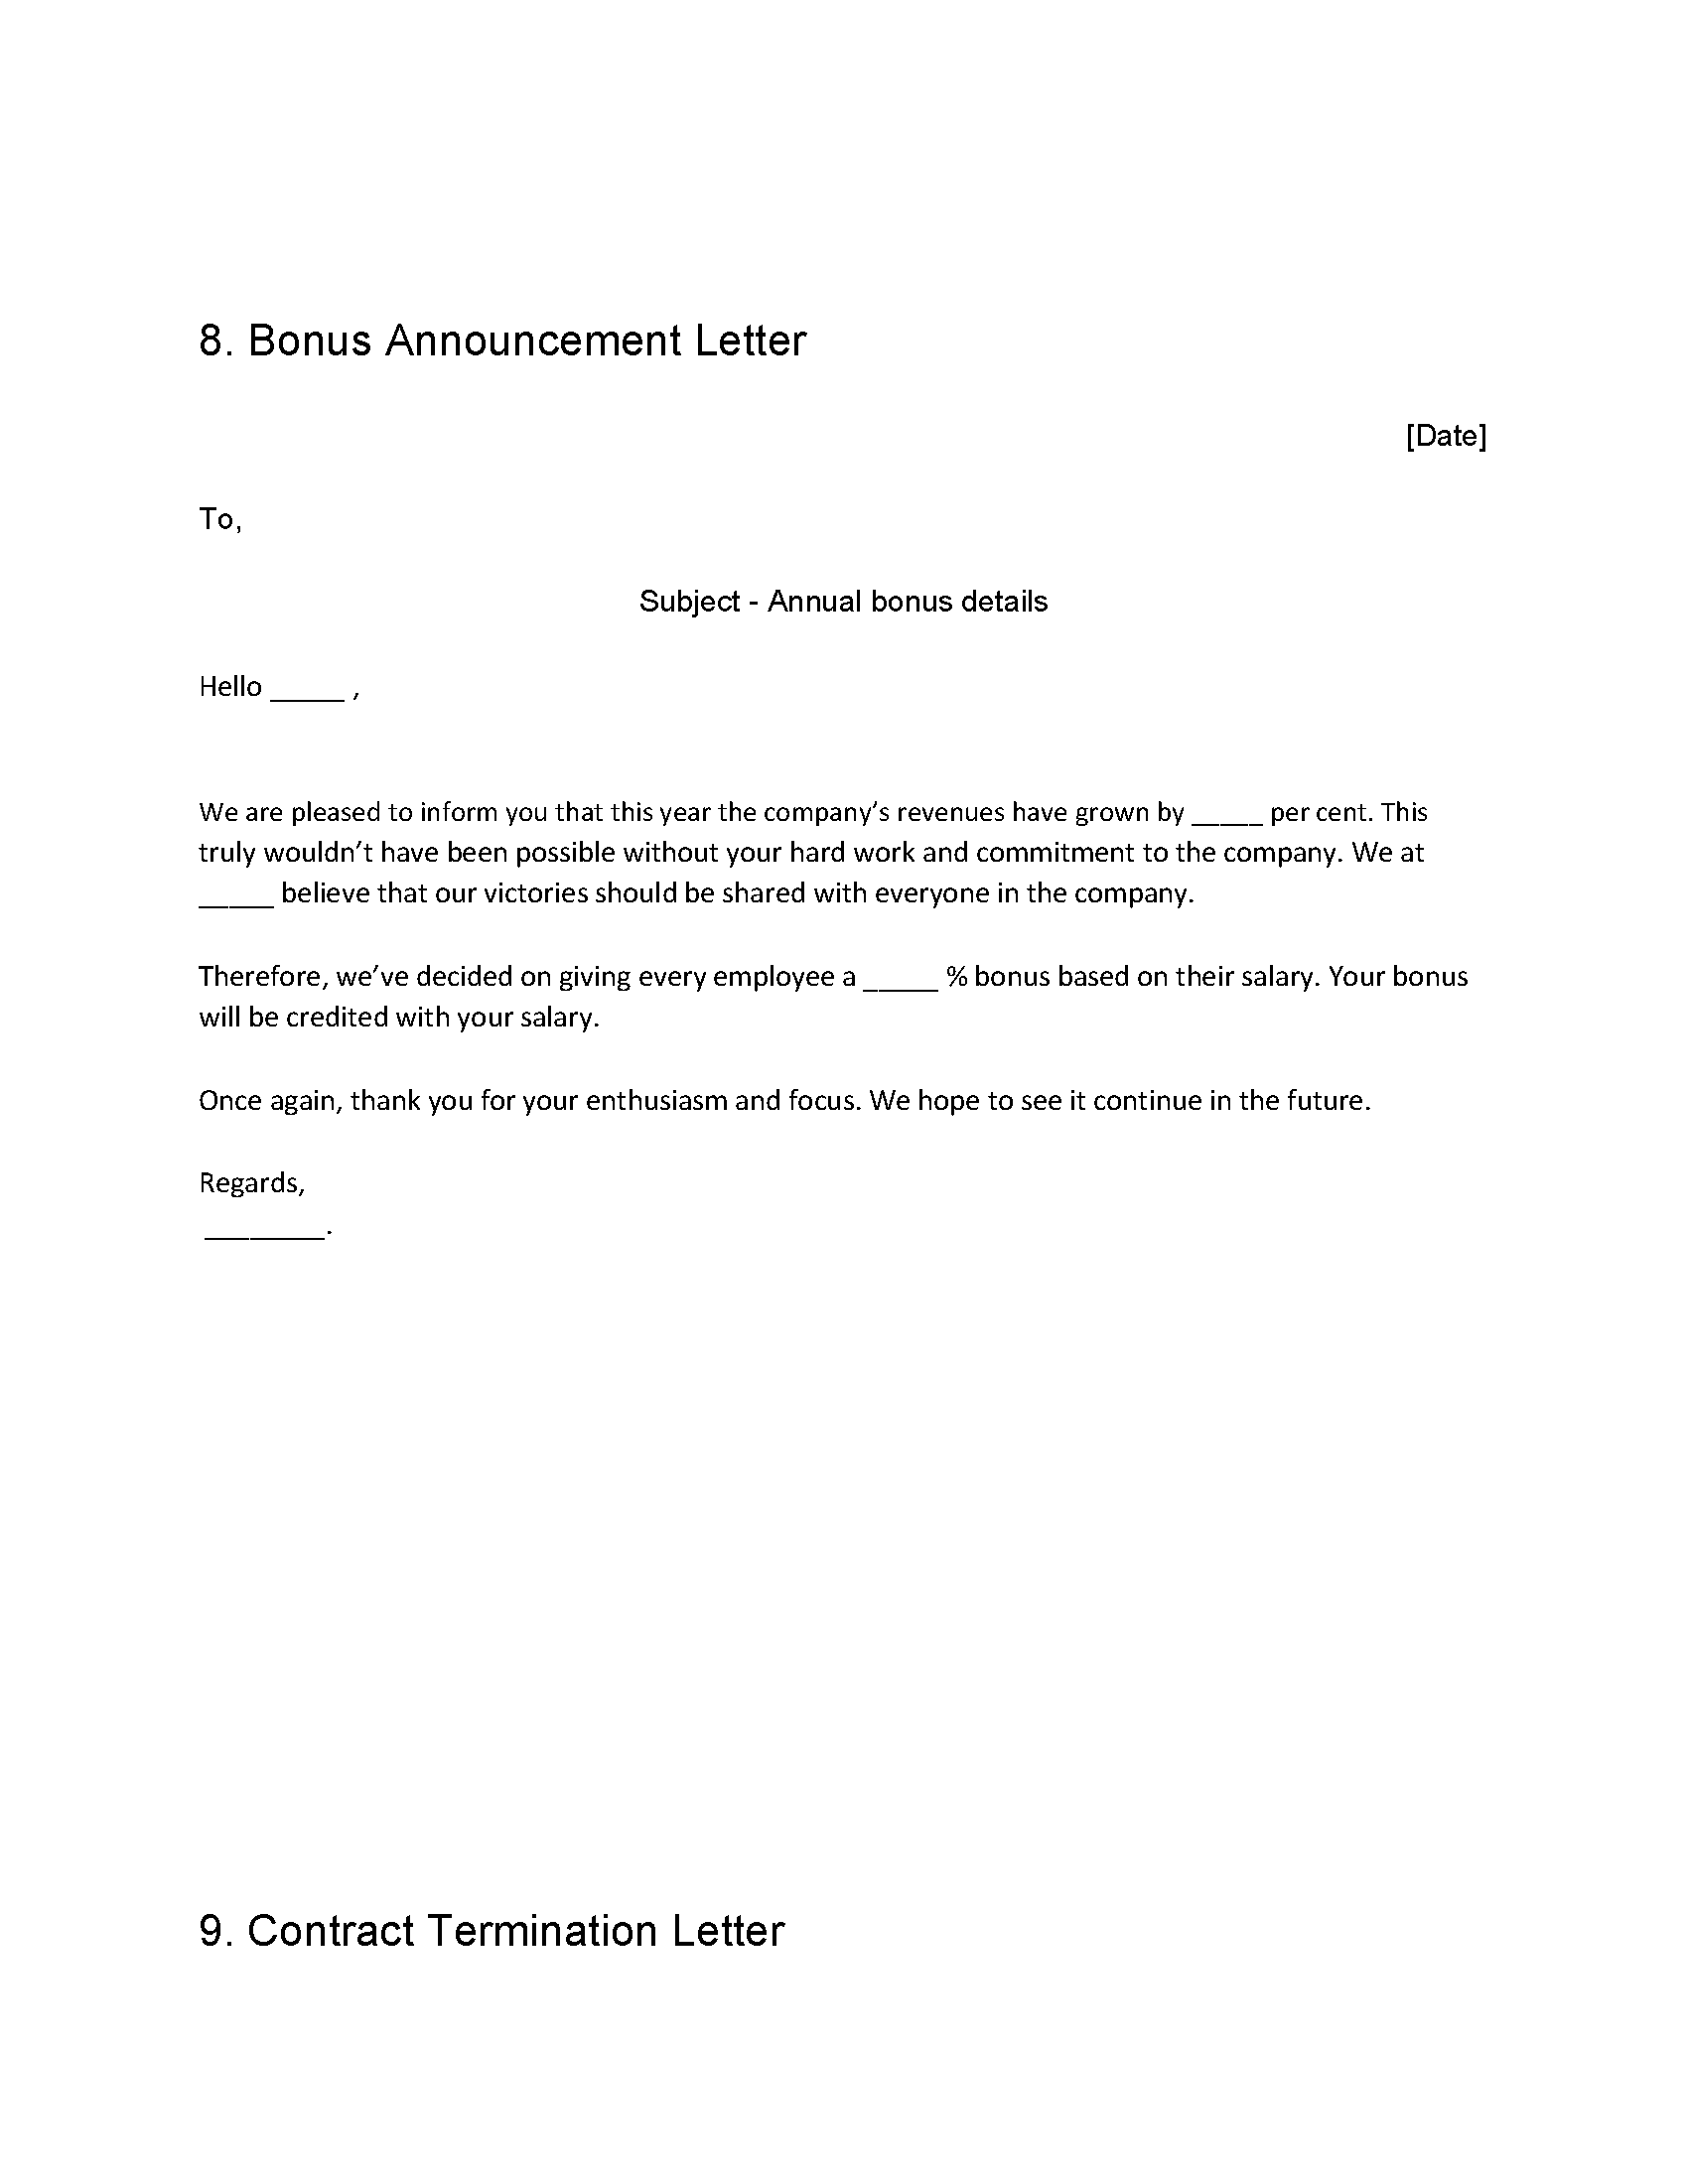 3 - Bonus Announcement Letter